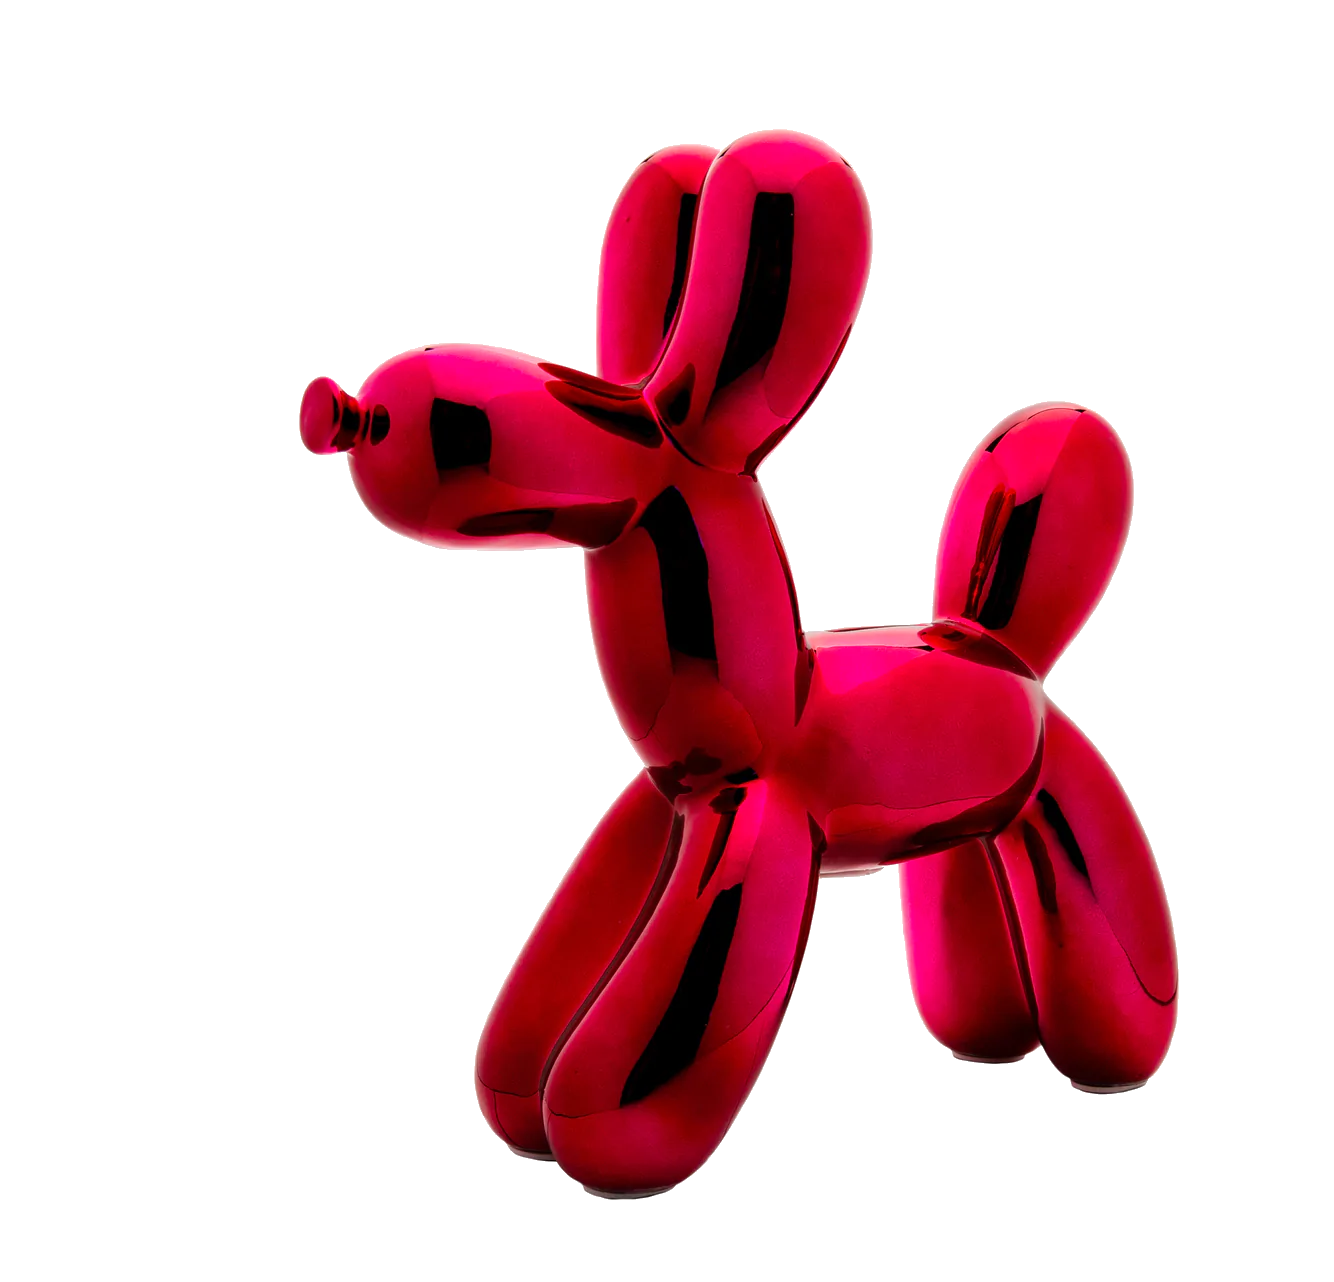 Balloon dog PNG